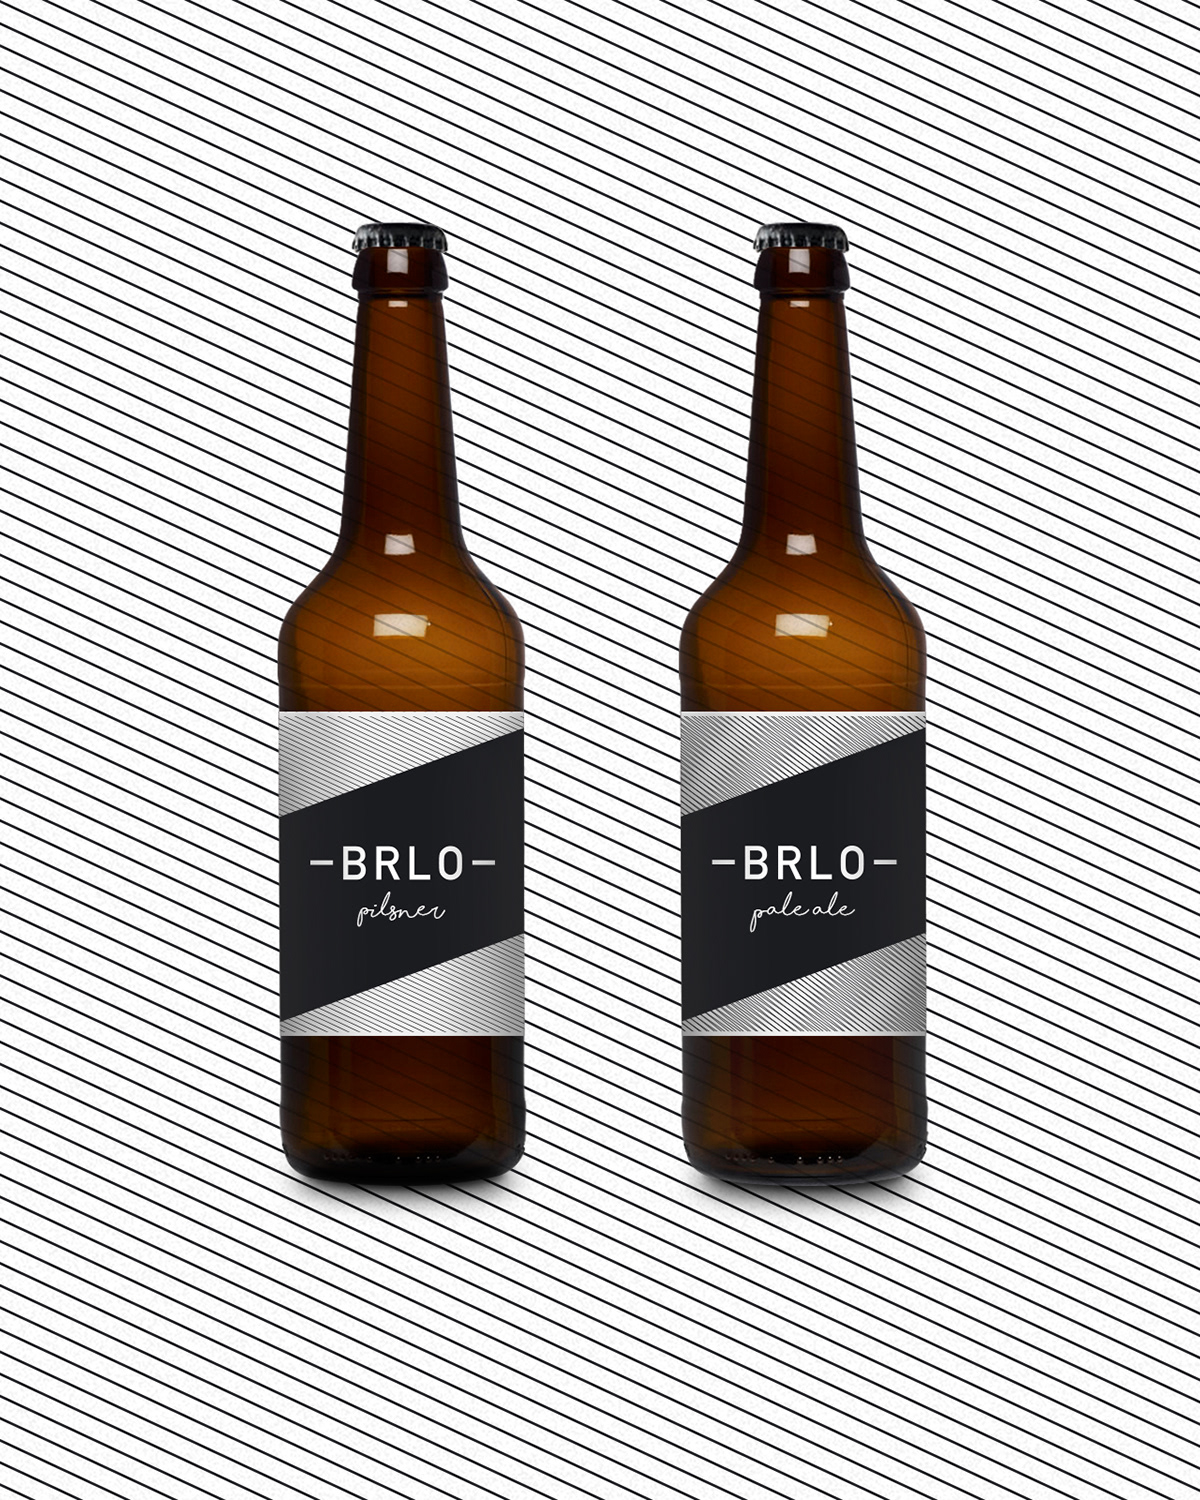 Adobe Portfolio beer label design Packaging graphic design  art direction 